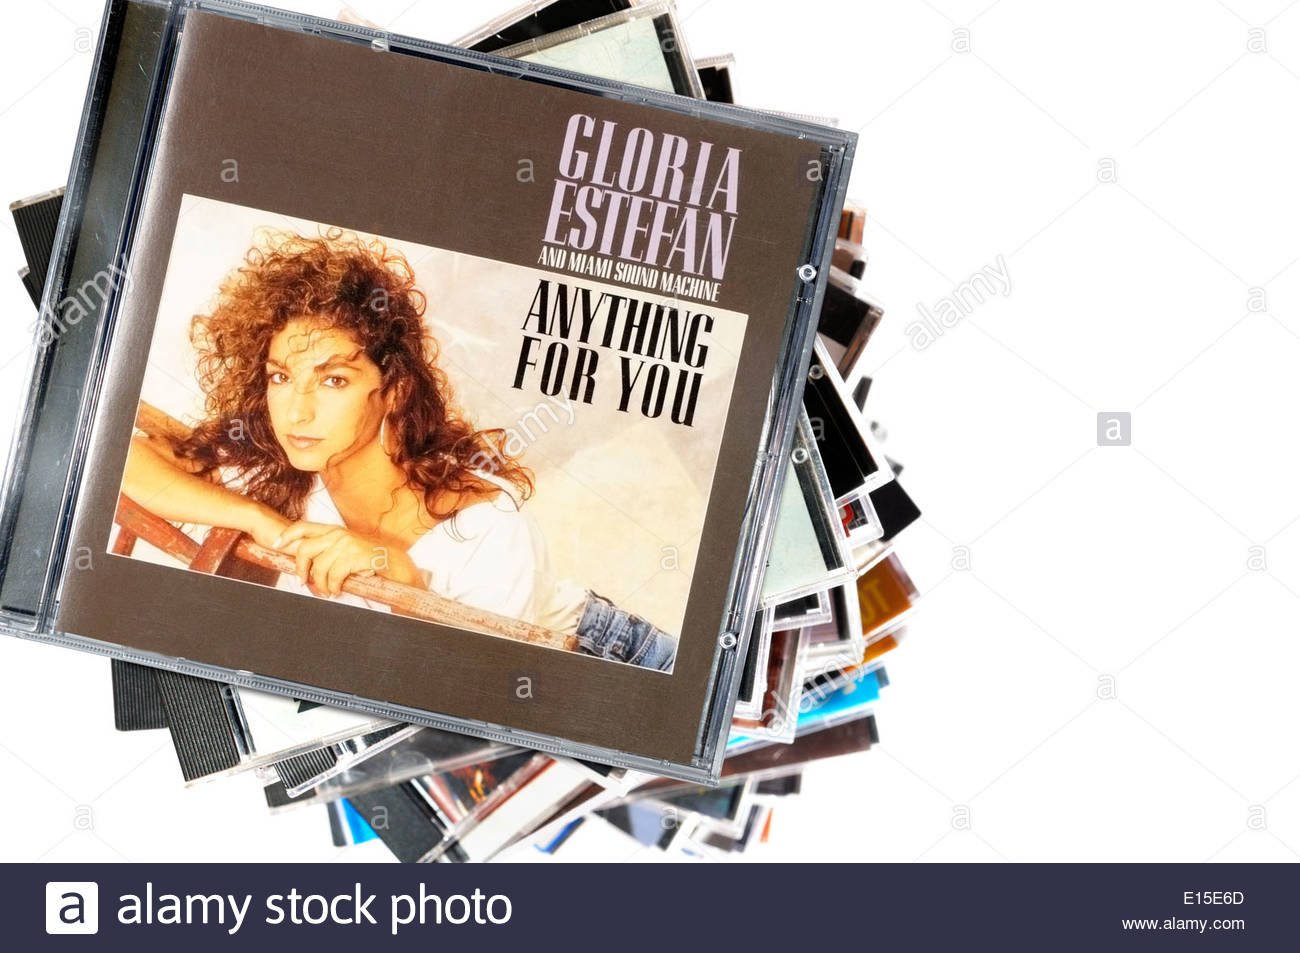 Gloria Estefan and Miami Sound Machine album Anything For You (Let it Stock  Photo - Alamy